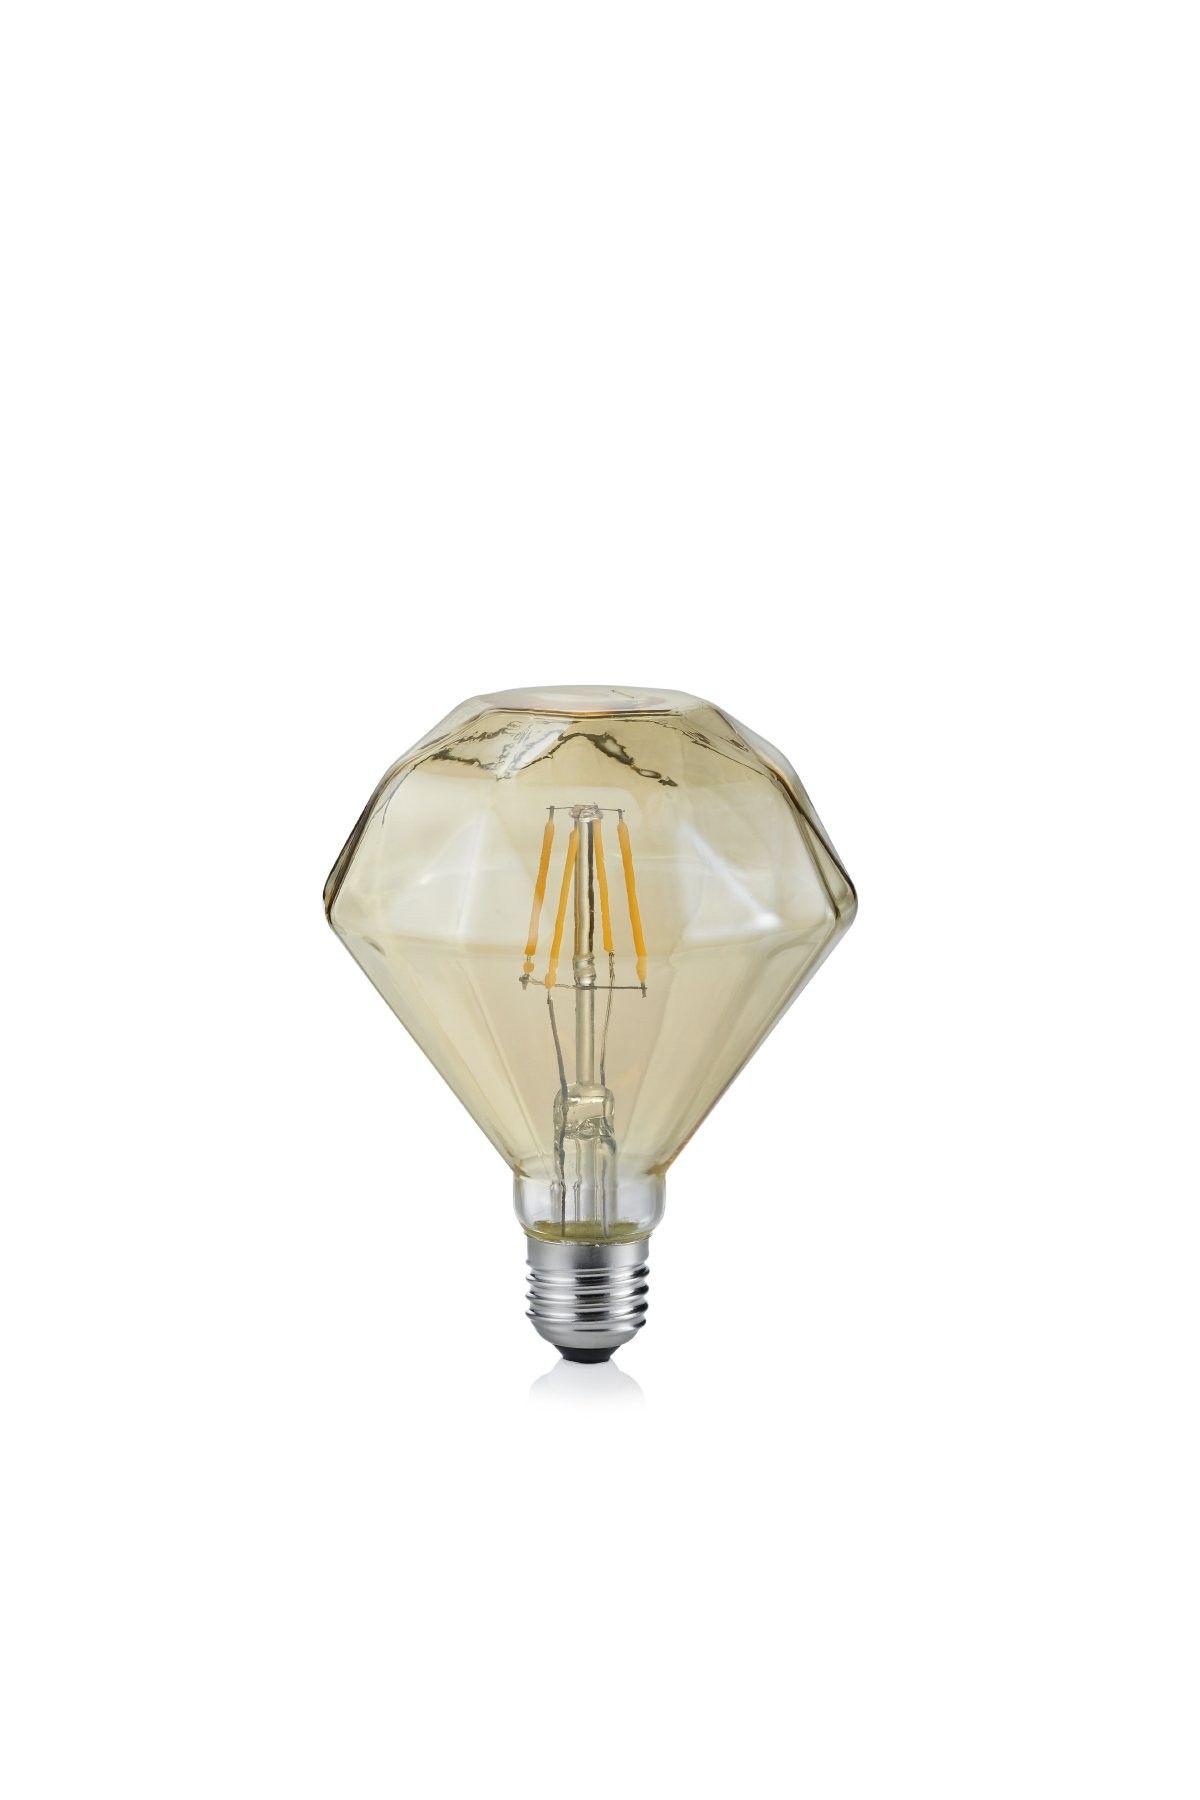 Trio 902-479 LED designová filamentová žárovka Diamant 1x4W | E27 | 320lm | 2700K - jantar - Dekolamp s.r.o.